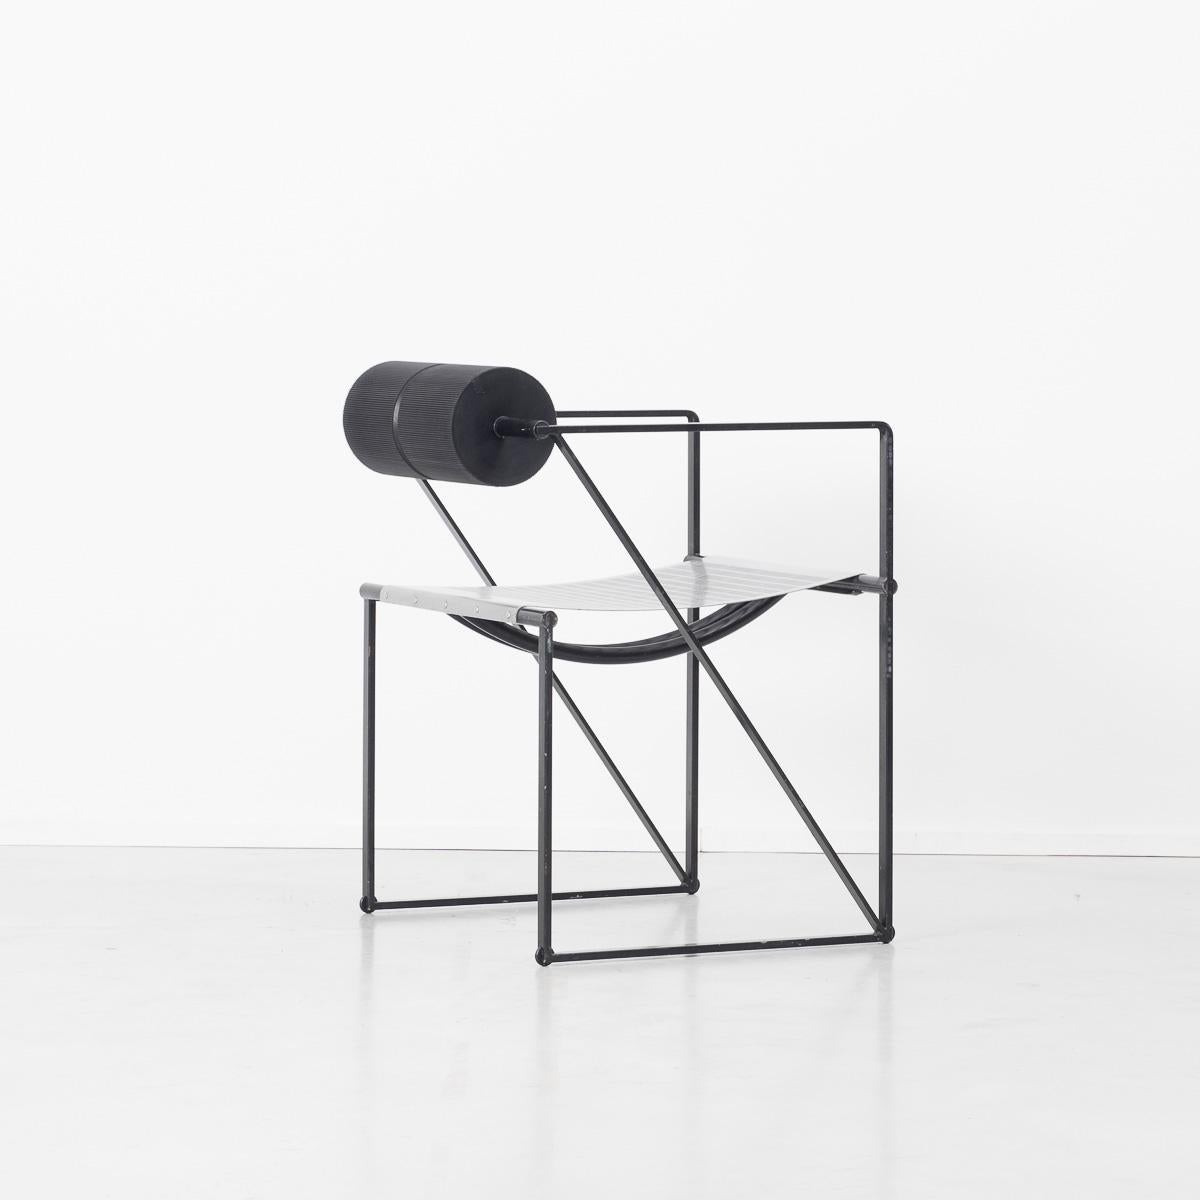 Post-Modern Seconda Chairs by Mario Botta for Alias, Italy, 1982